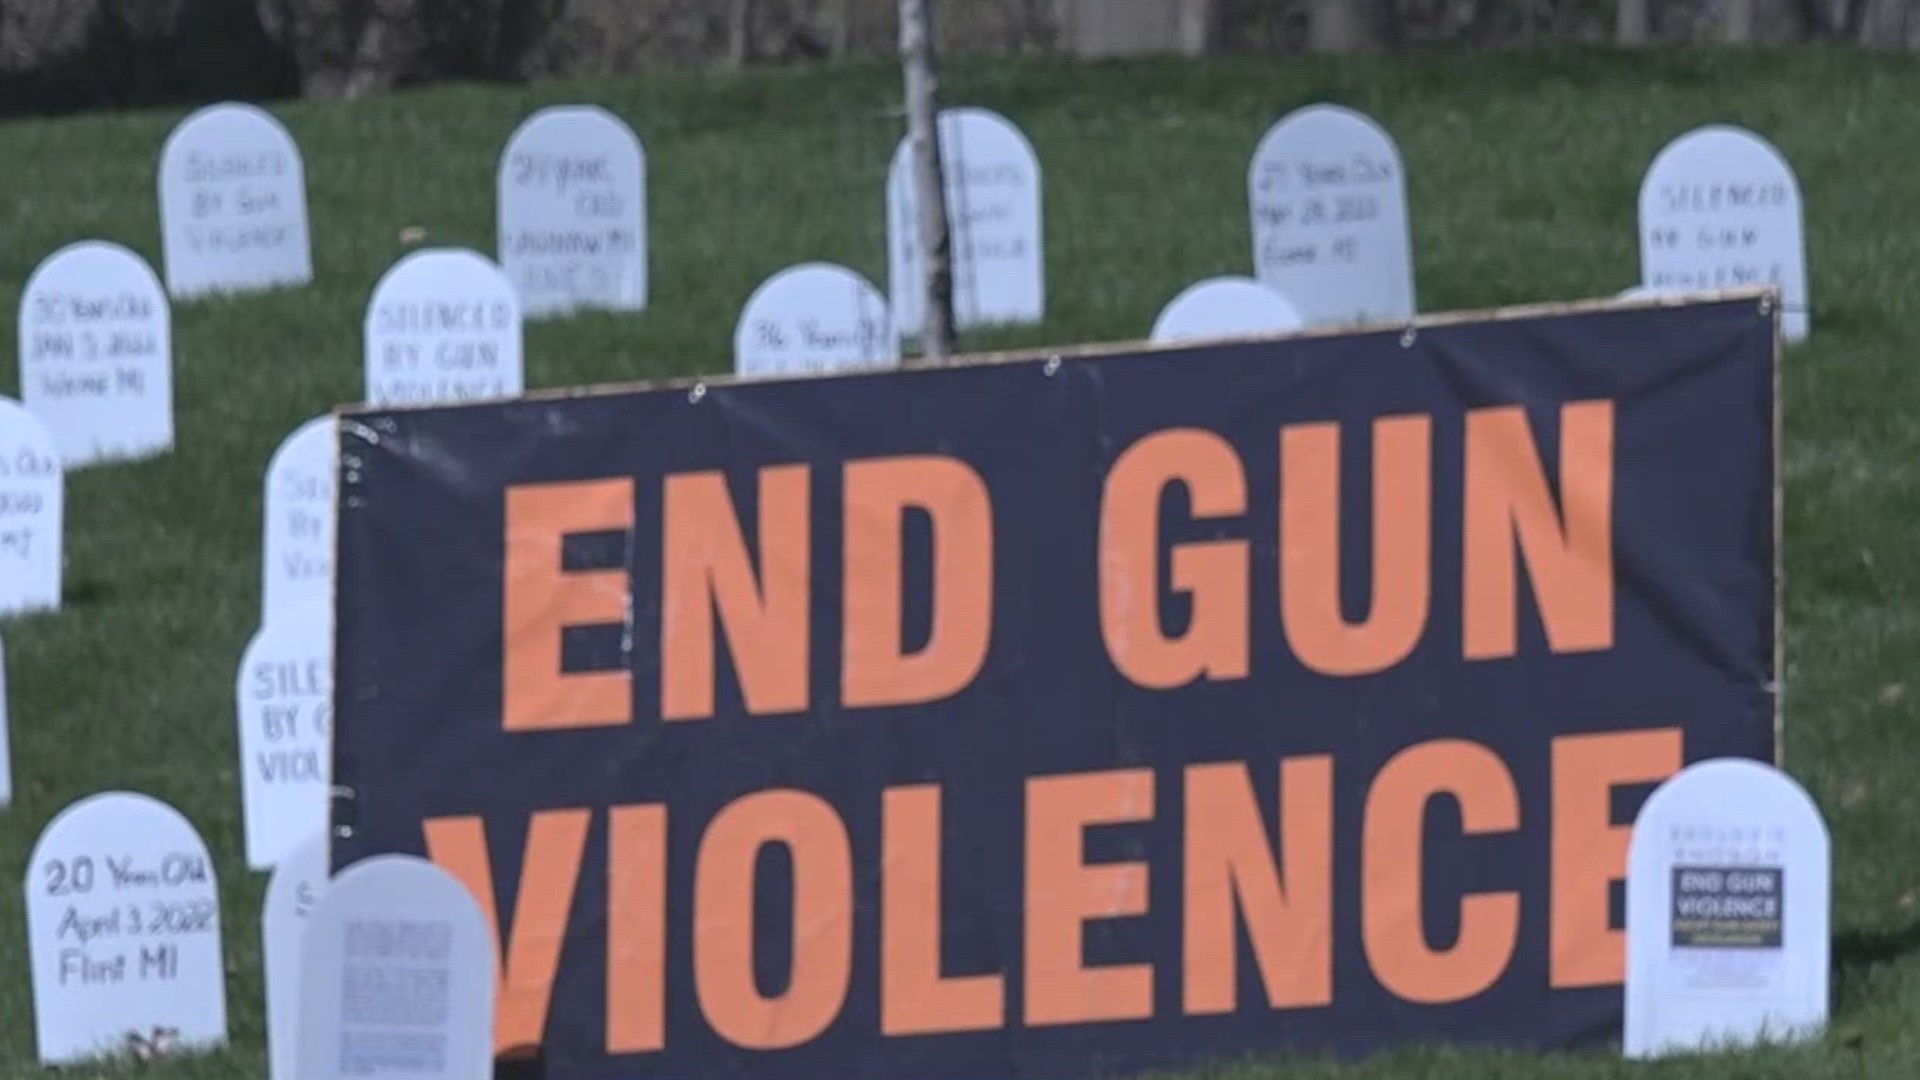 Ottawa Co. church remembers gun violence victims